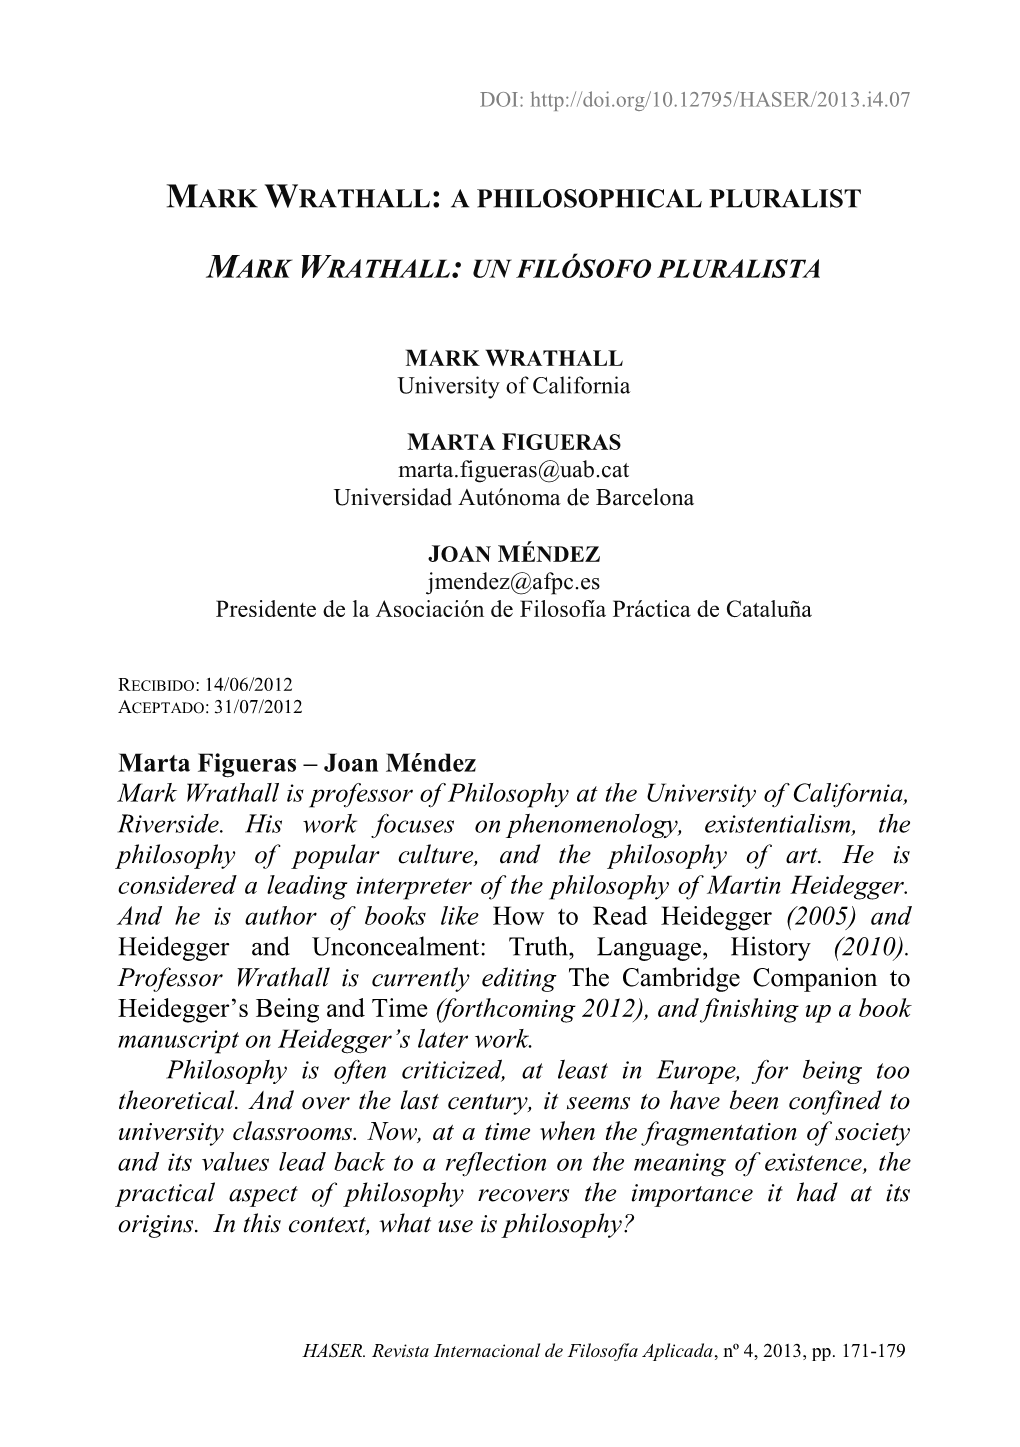 Mark Wrathall: a Philosophical Pluralist